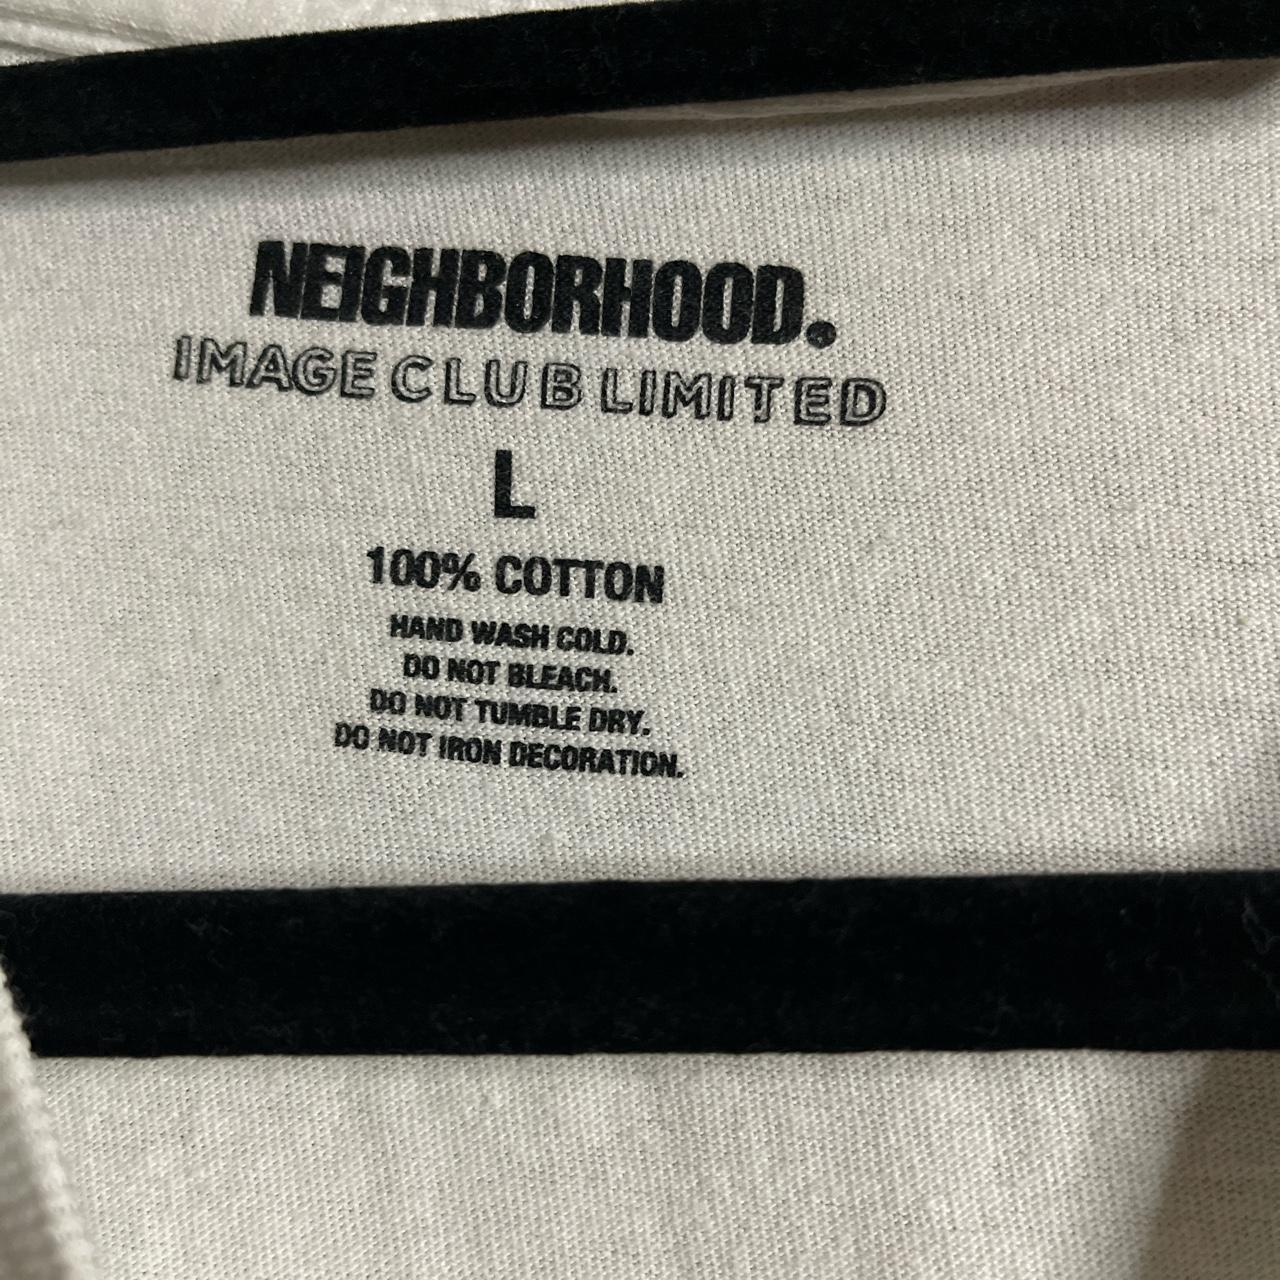 Neighborhood Men's White and Black T-shirt (2)